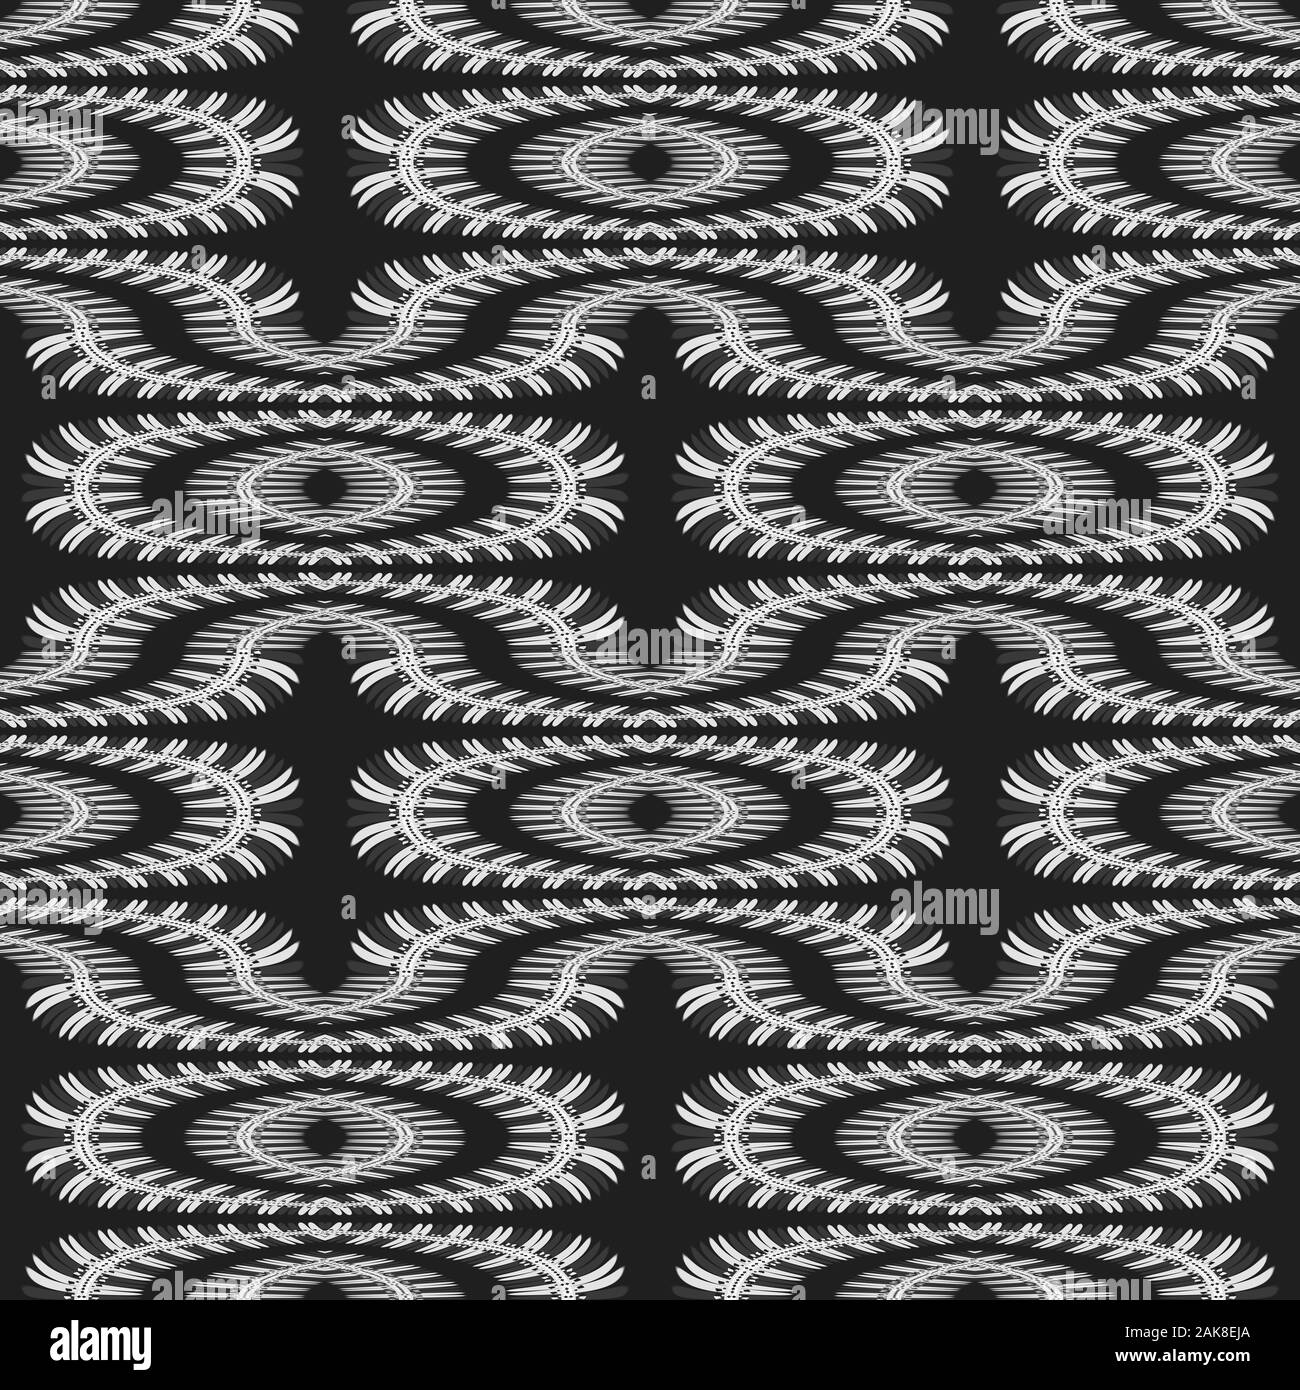 Monochrome centipede arabesque. Geometric algorithmic pattern in black and white. Stock Photo